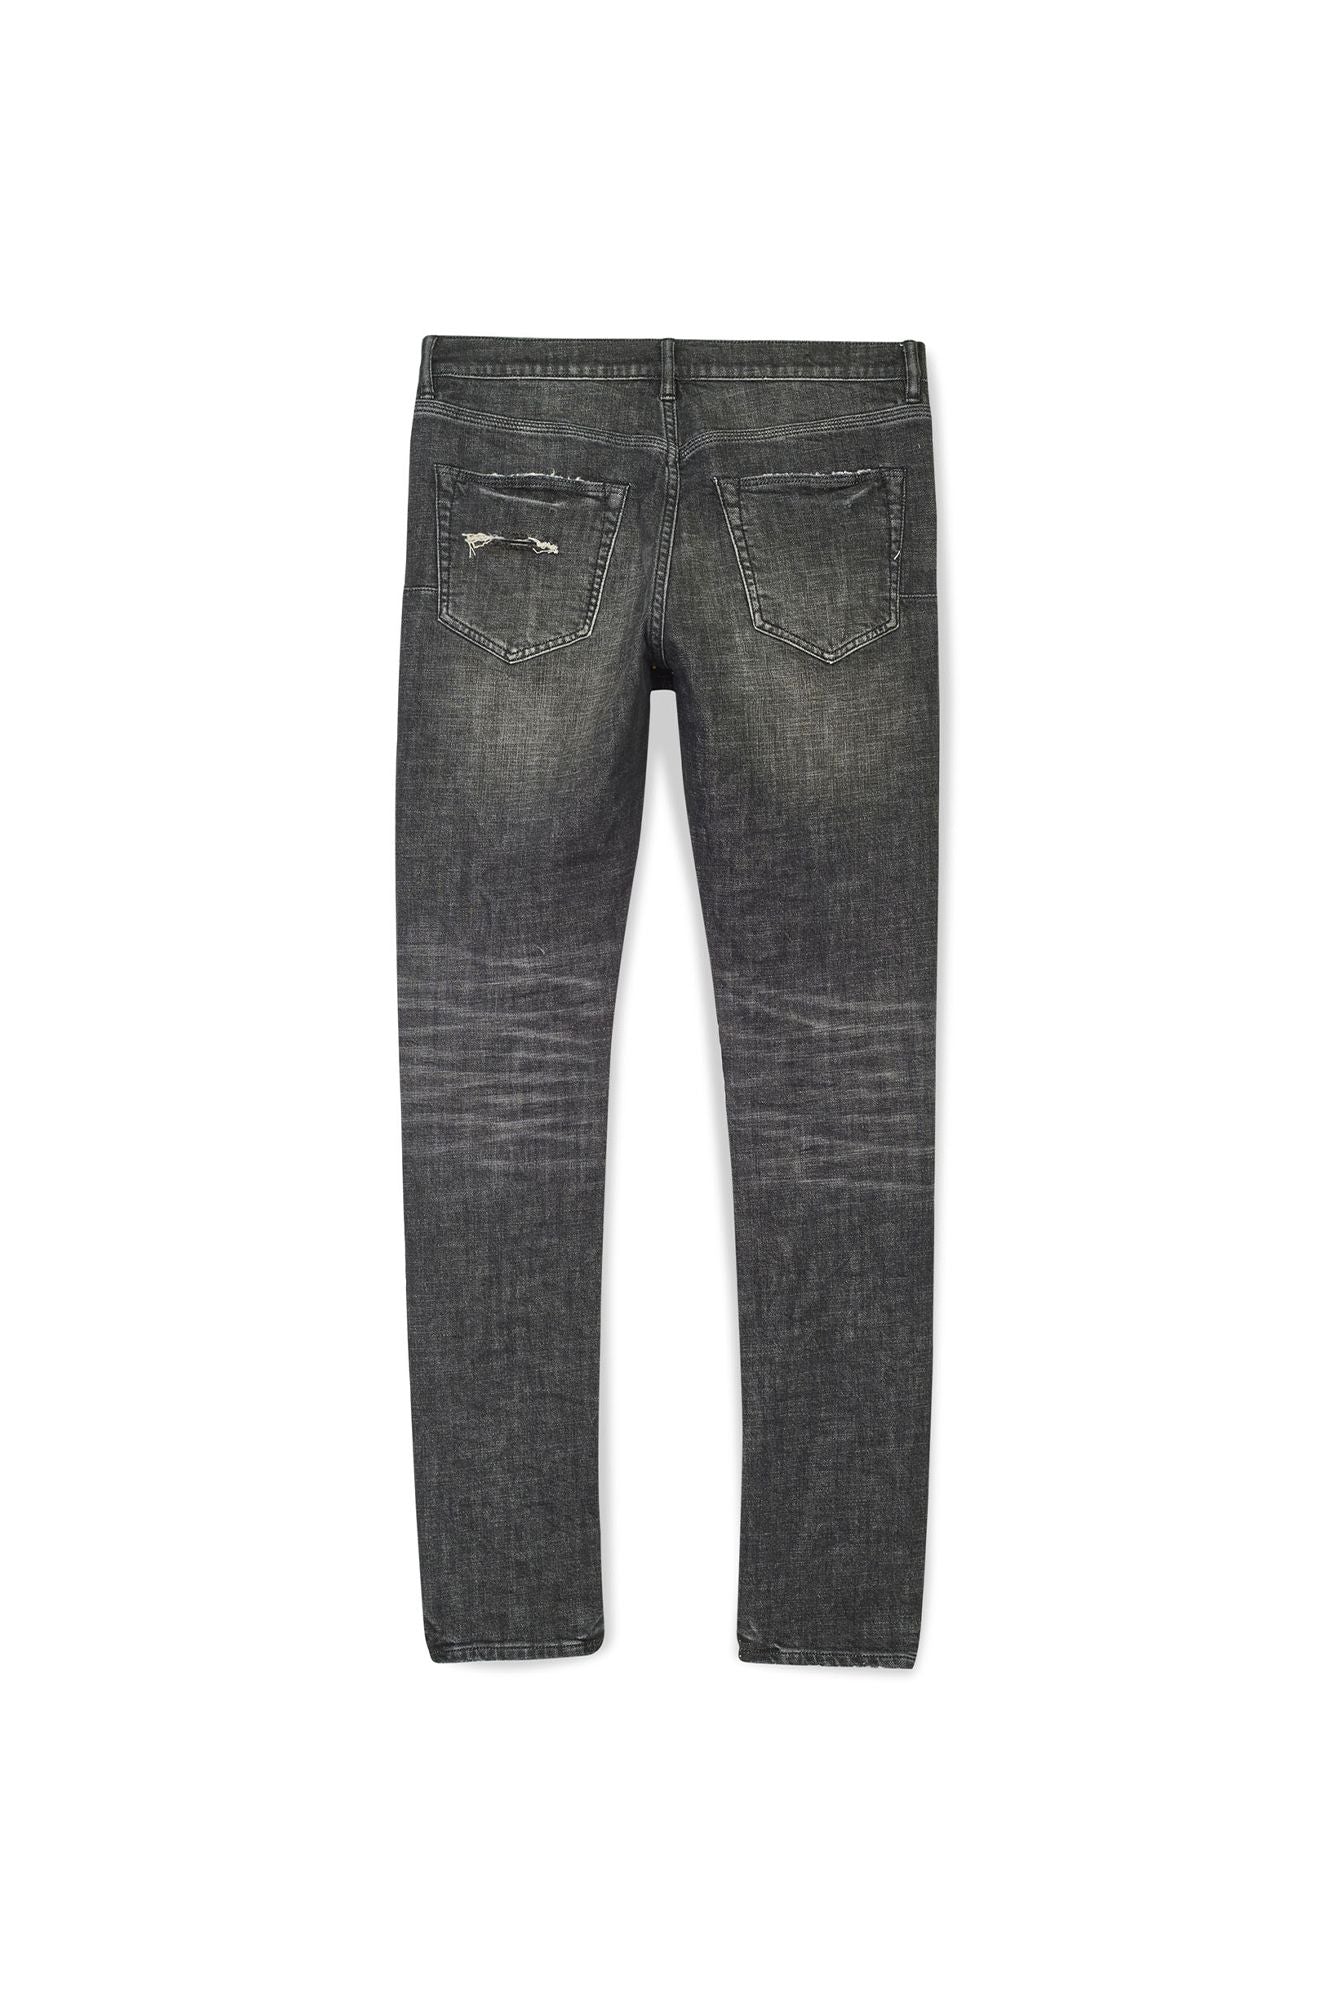 PURPLE BRAND - Men's Denim Jean - Low Rise Skinny - Style No. P001 - Exclusive Grey Wash Distress - Back